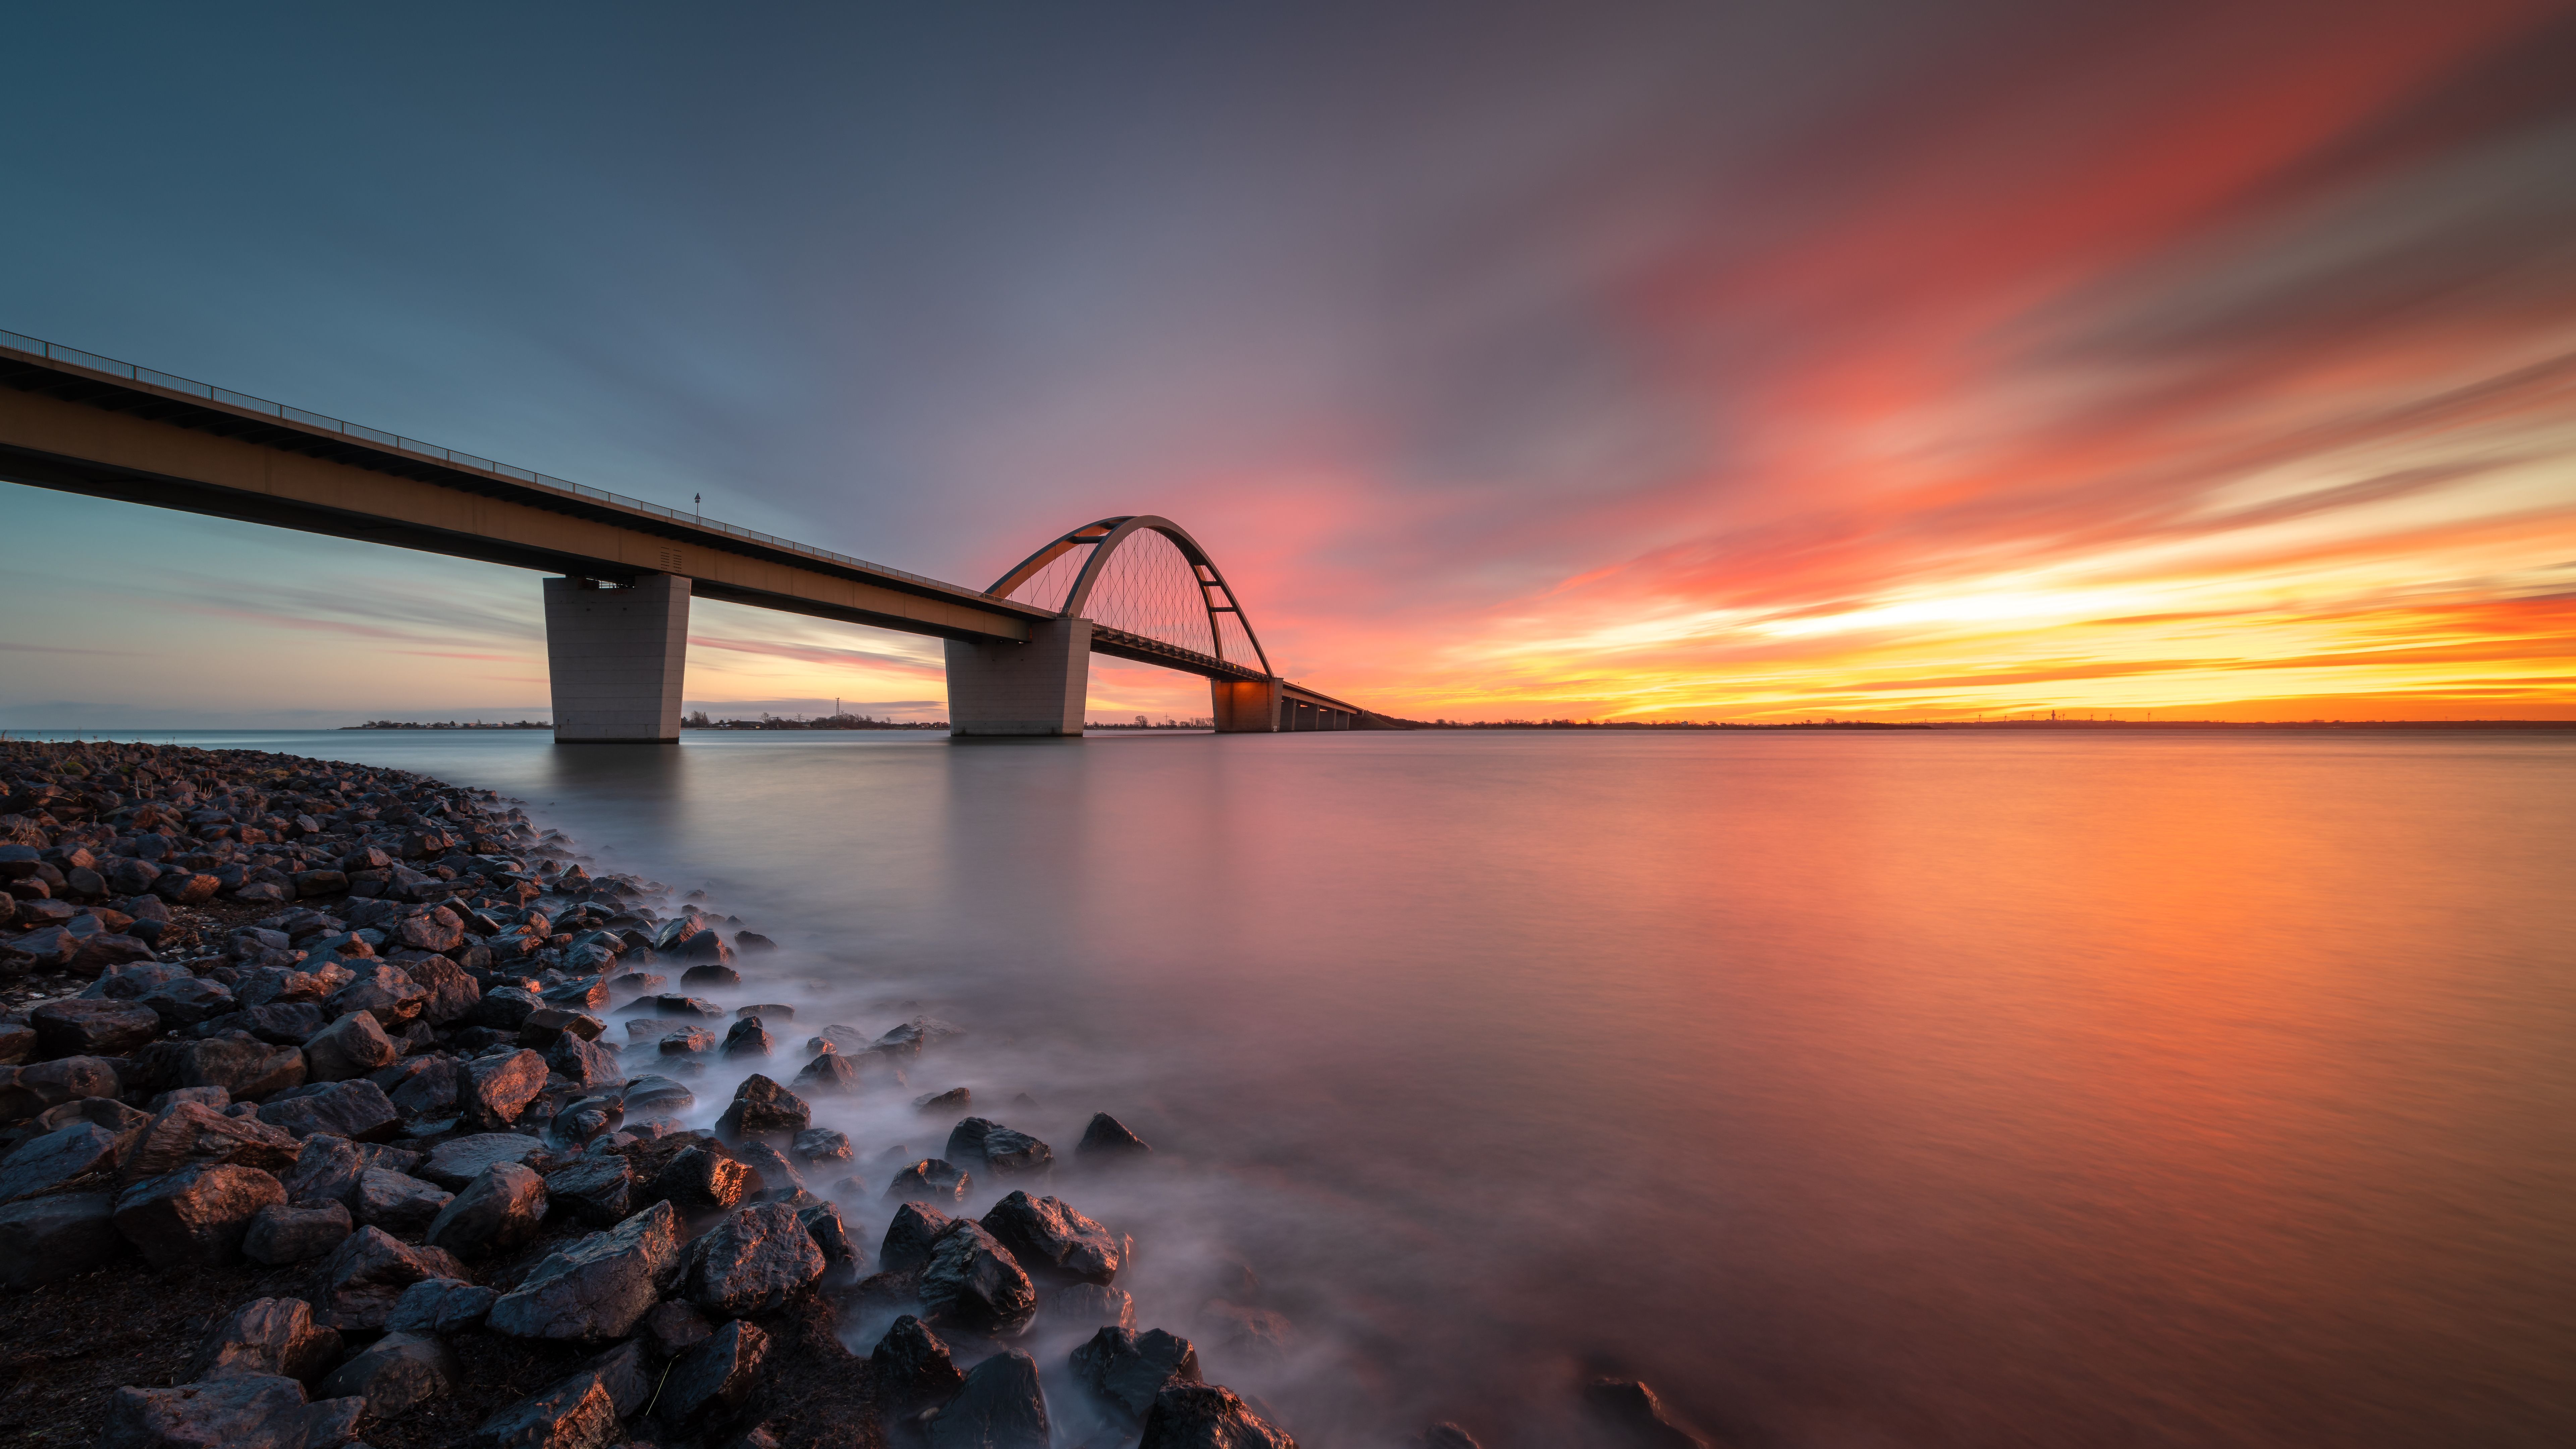 Bridge Sunset 8k 8k HD 4k Wallpaper, Image, Background, Photo and Picture